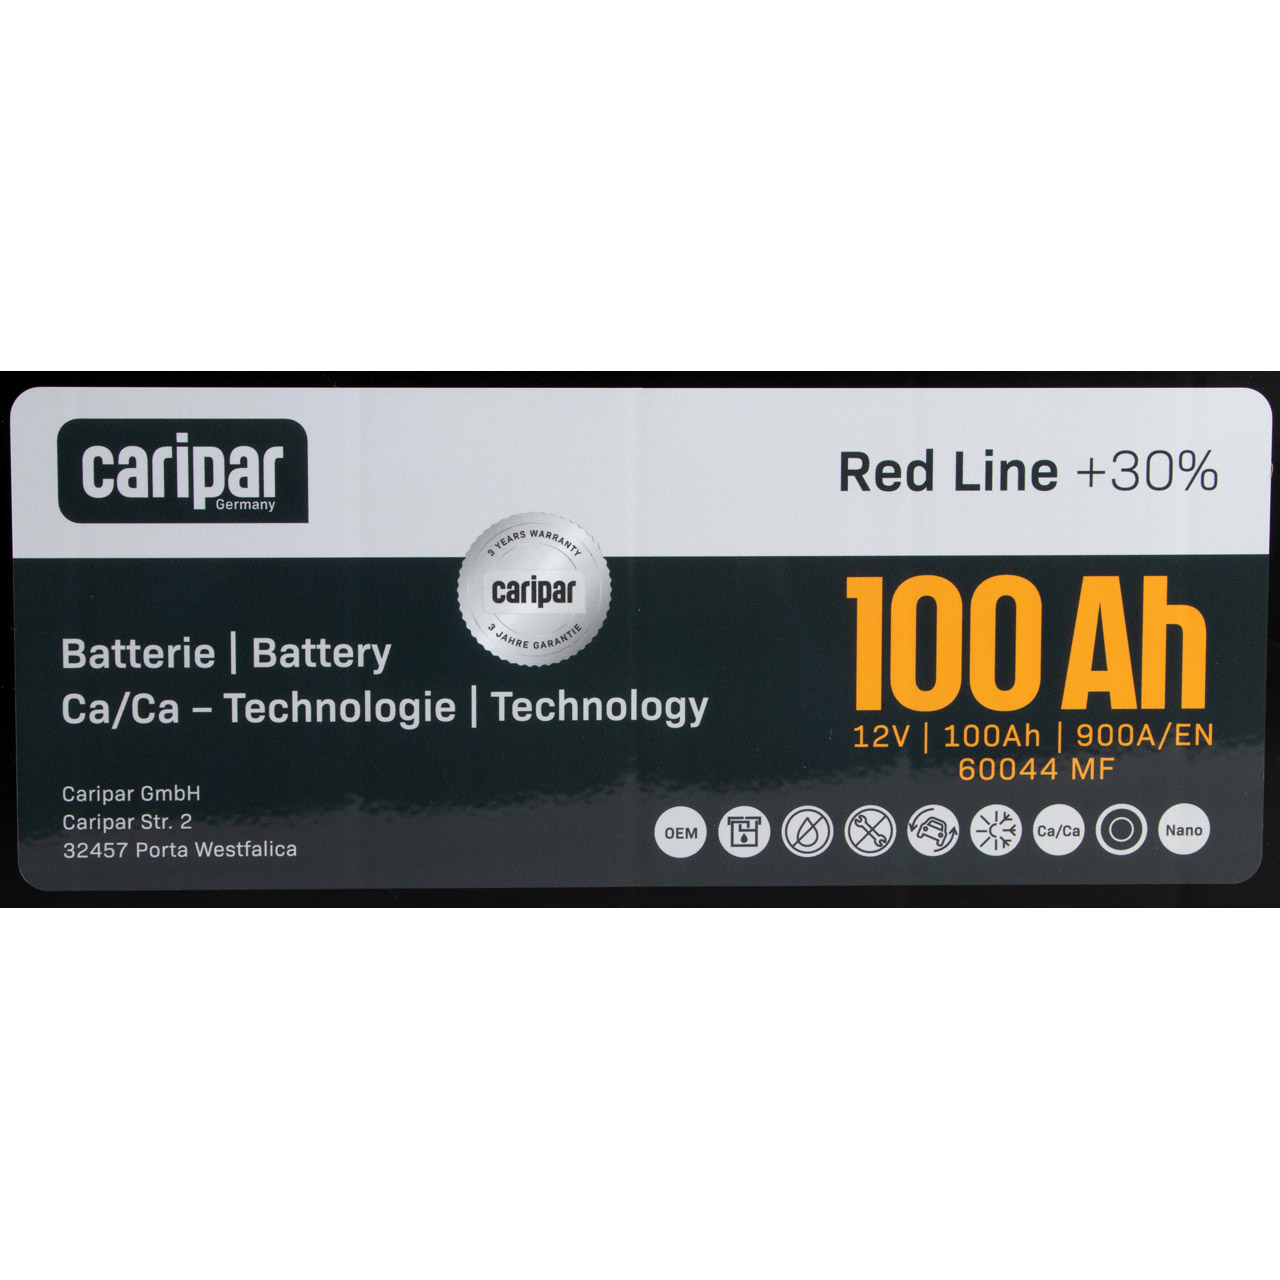 CARIPAR RED LINE +30% PKW KFZ Autobatterie Starterbatterie 12V 100Ah 900A/EN B13